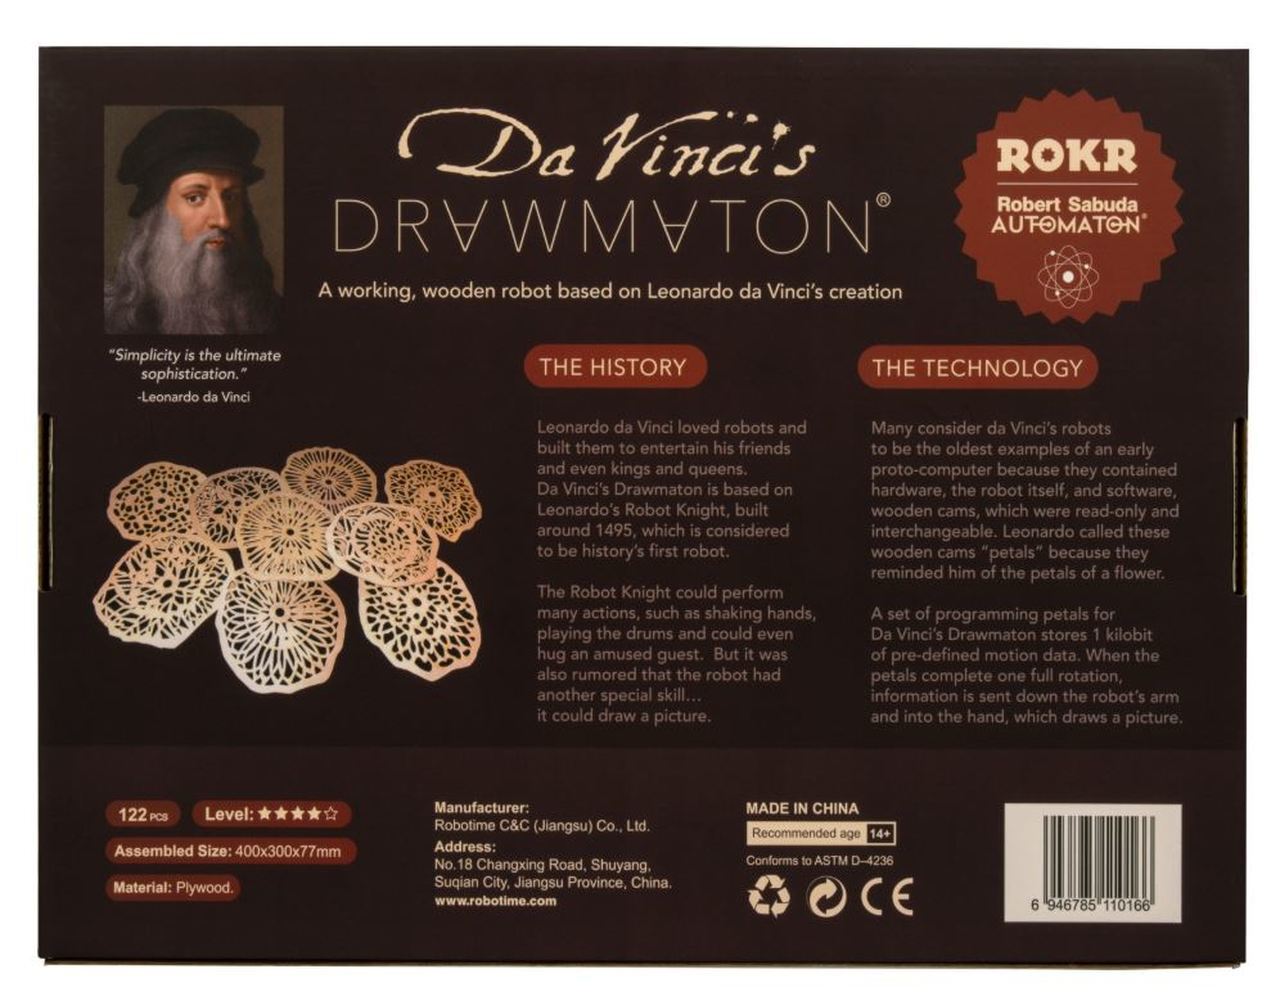 Da Vinci Drawmaton - the Gambler